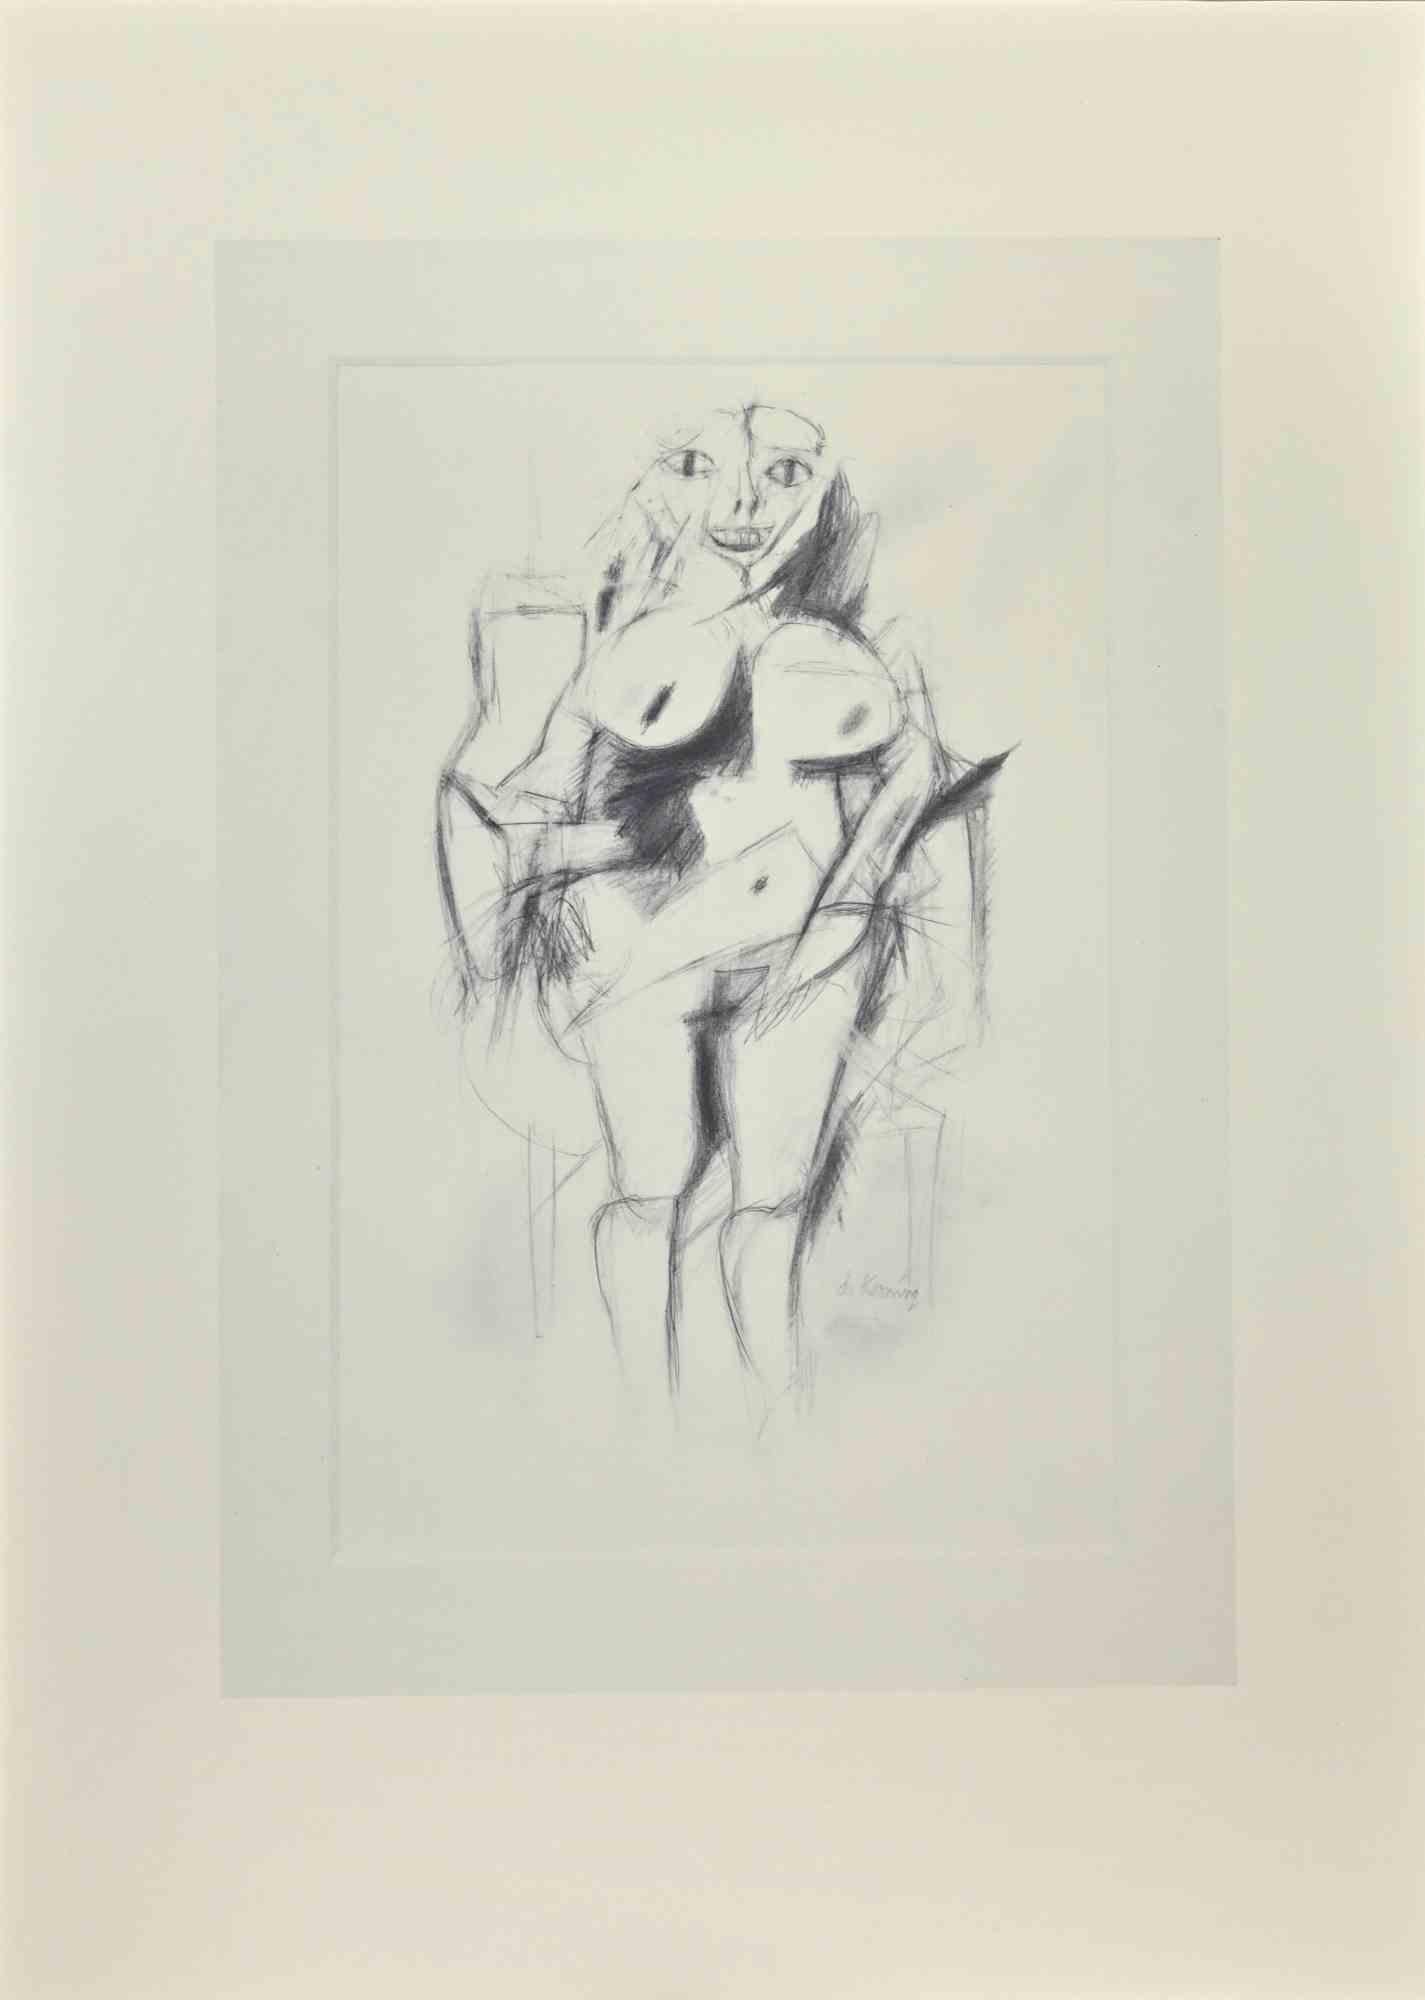 Willem de Kooning Print - Woman Standing - Offset and Lithograph after Willem De Kooning - 1985